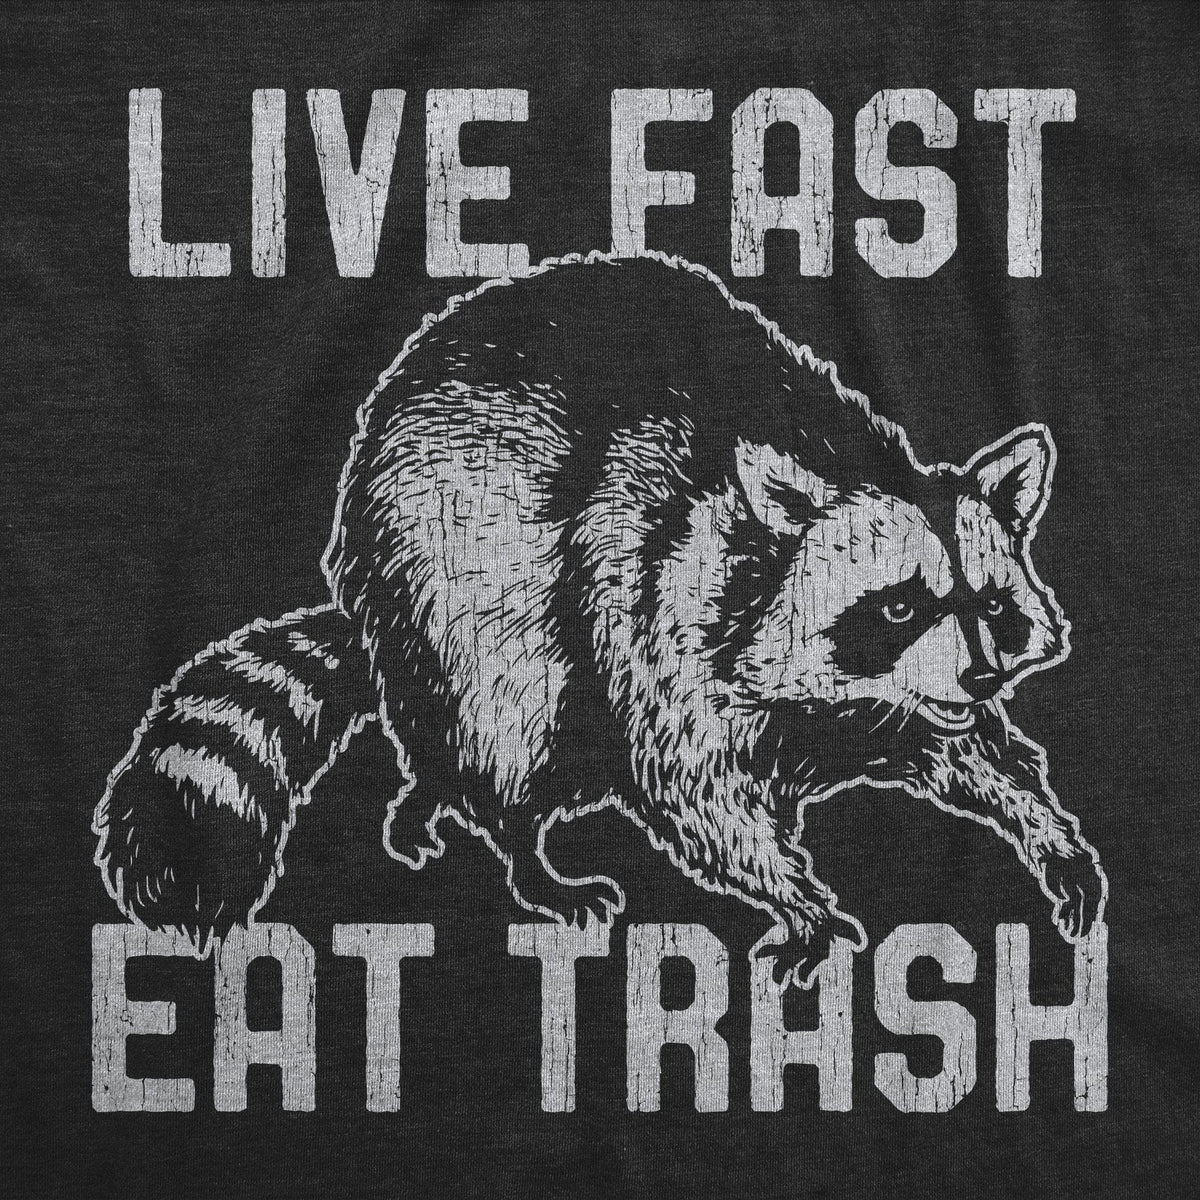 Live Fast Eat Trash Men&#39;s Tshirt - Crazy Dog T-Shirts